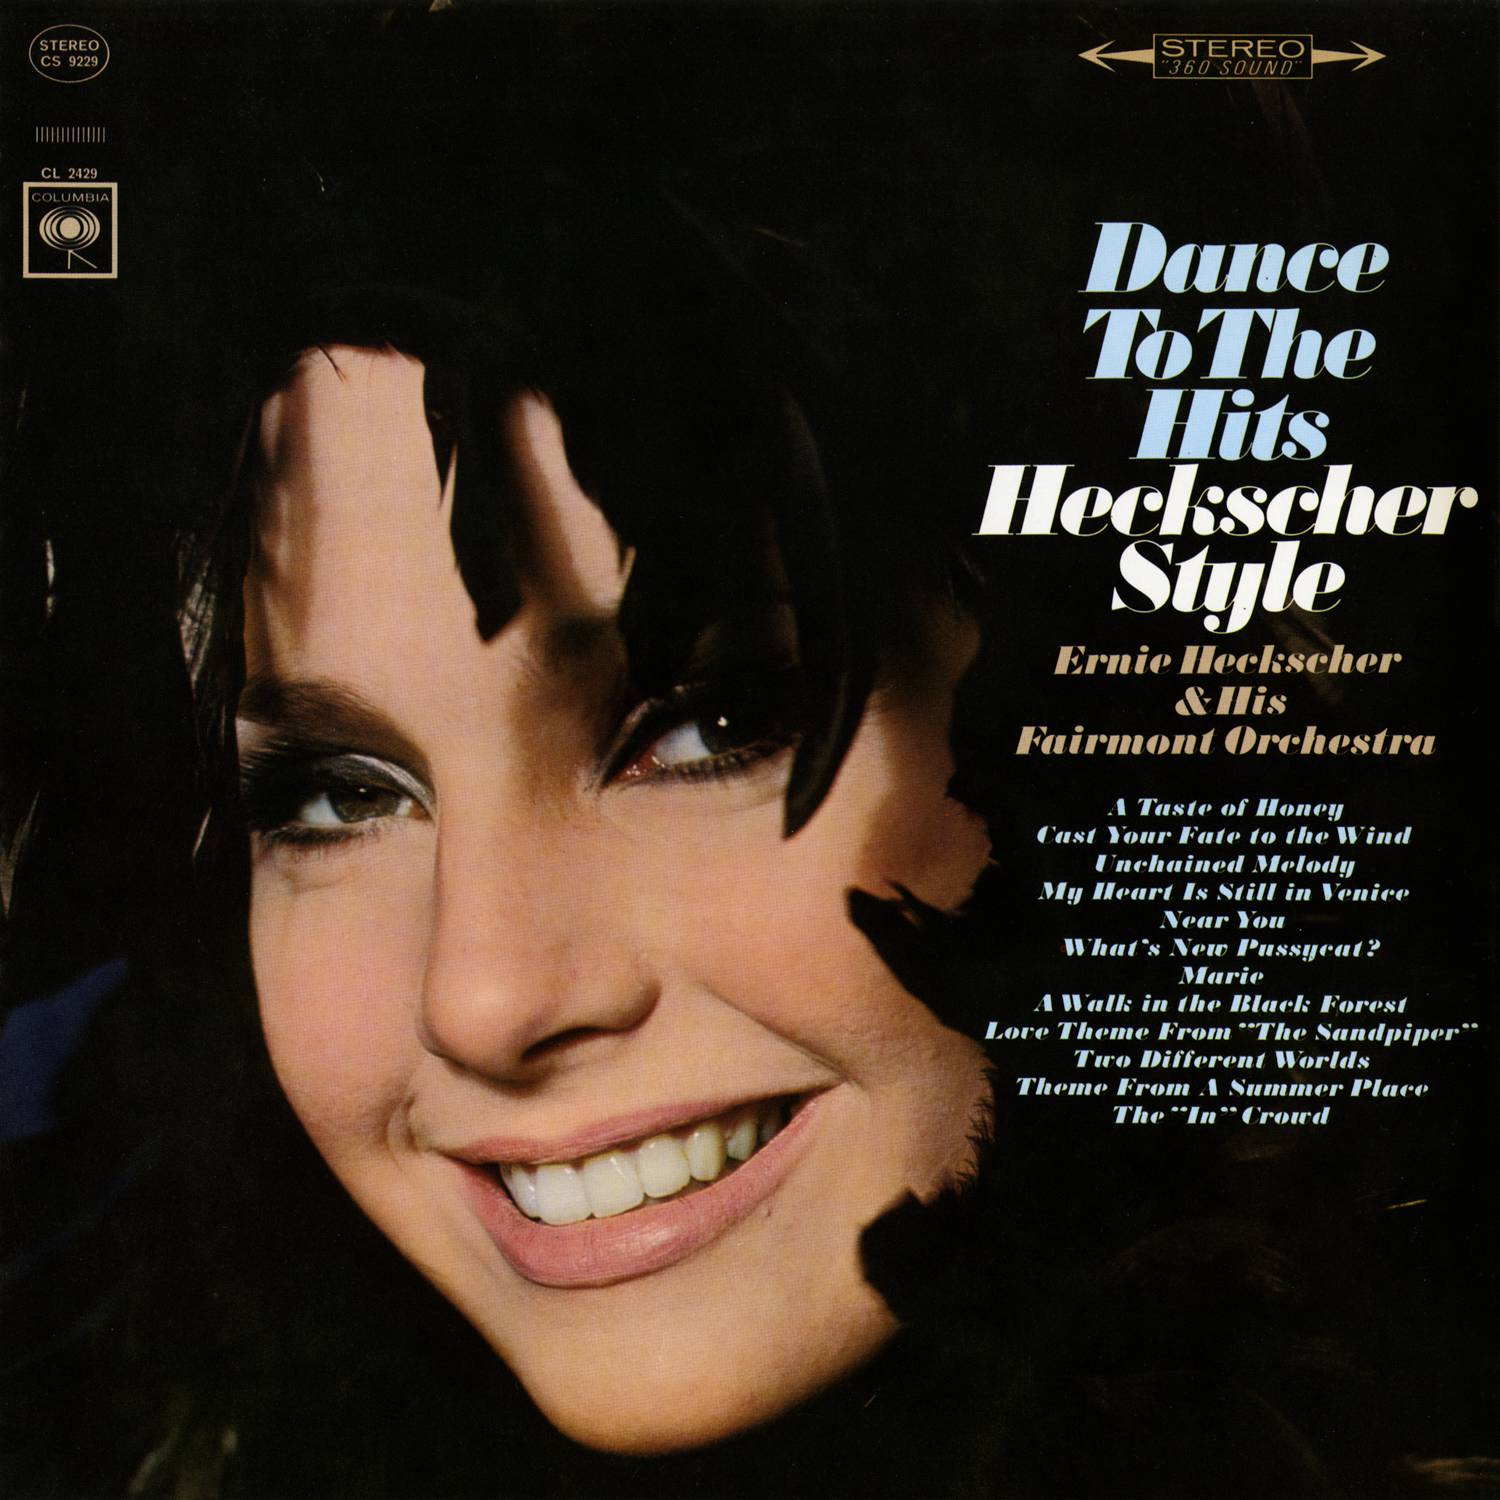 Ernie Heckscher & His Fairmont Orchestra – Dance To The Hits Heckscher Style (1967/2015) [AcousticSounds FLAC 24bit/96kHz]